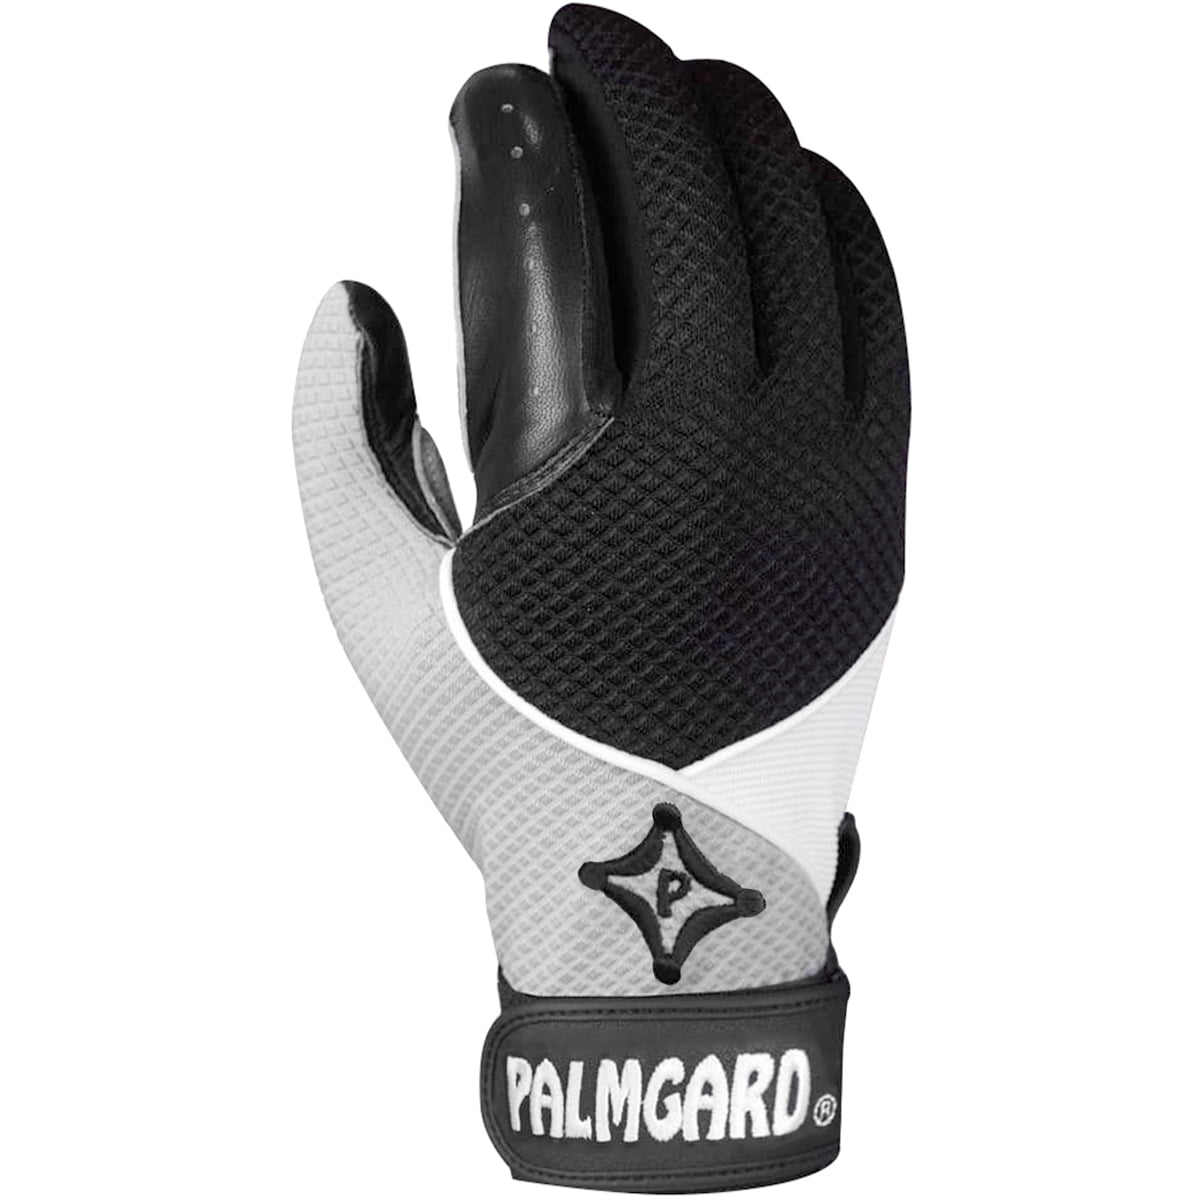 Palmgard Inner Liner Protection Glove 